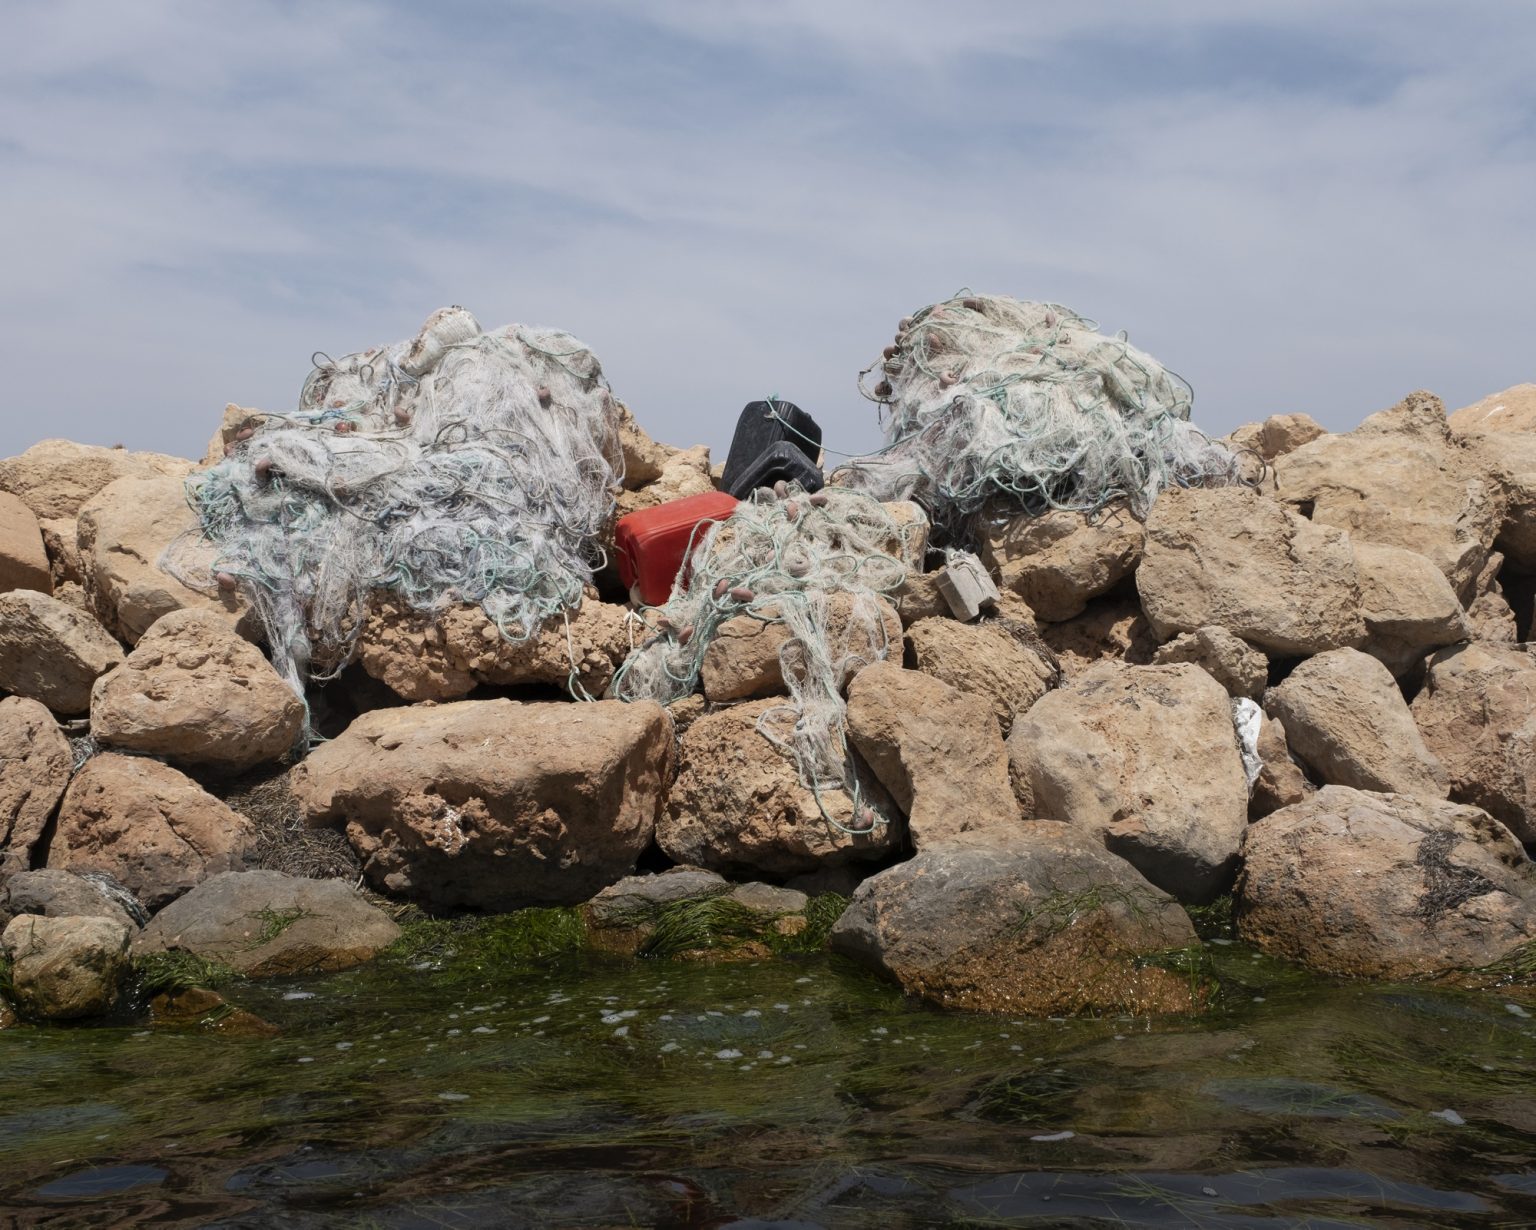 Kerkennah Islands (Tunisia), June 2022 - Fishing nets on the rocks.
><
Isole Kerkennah (Tunisia), giugno 2022 - Reti da pesca sugli scogli.